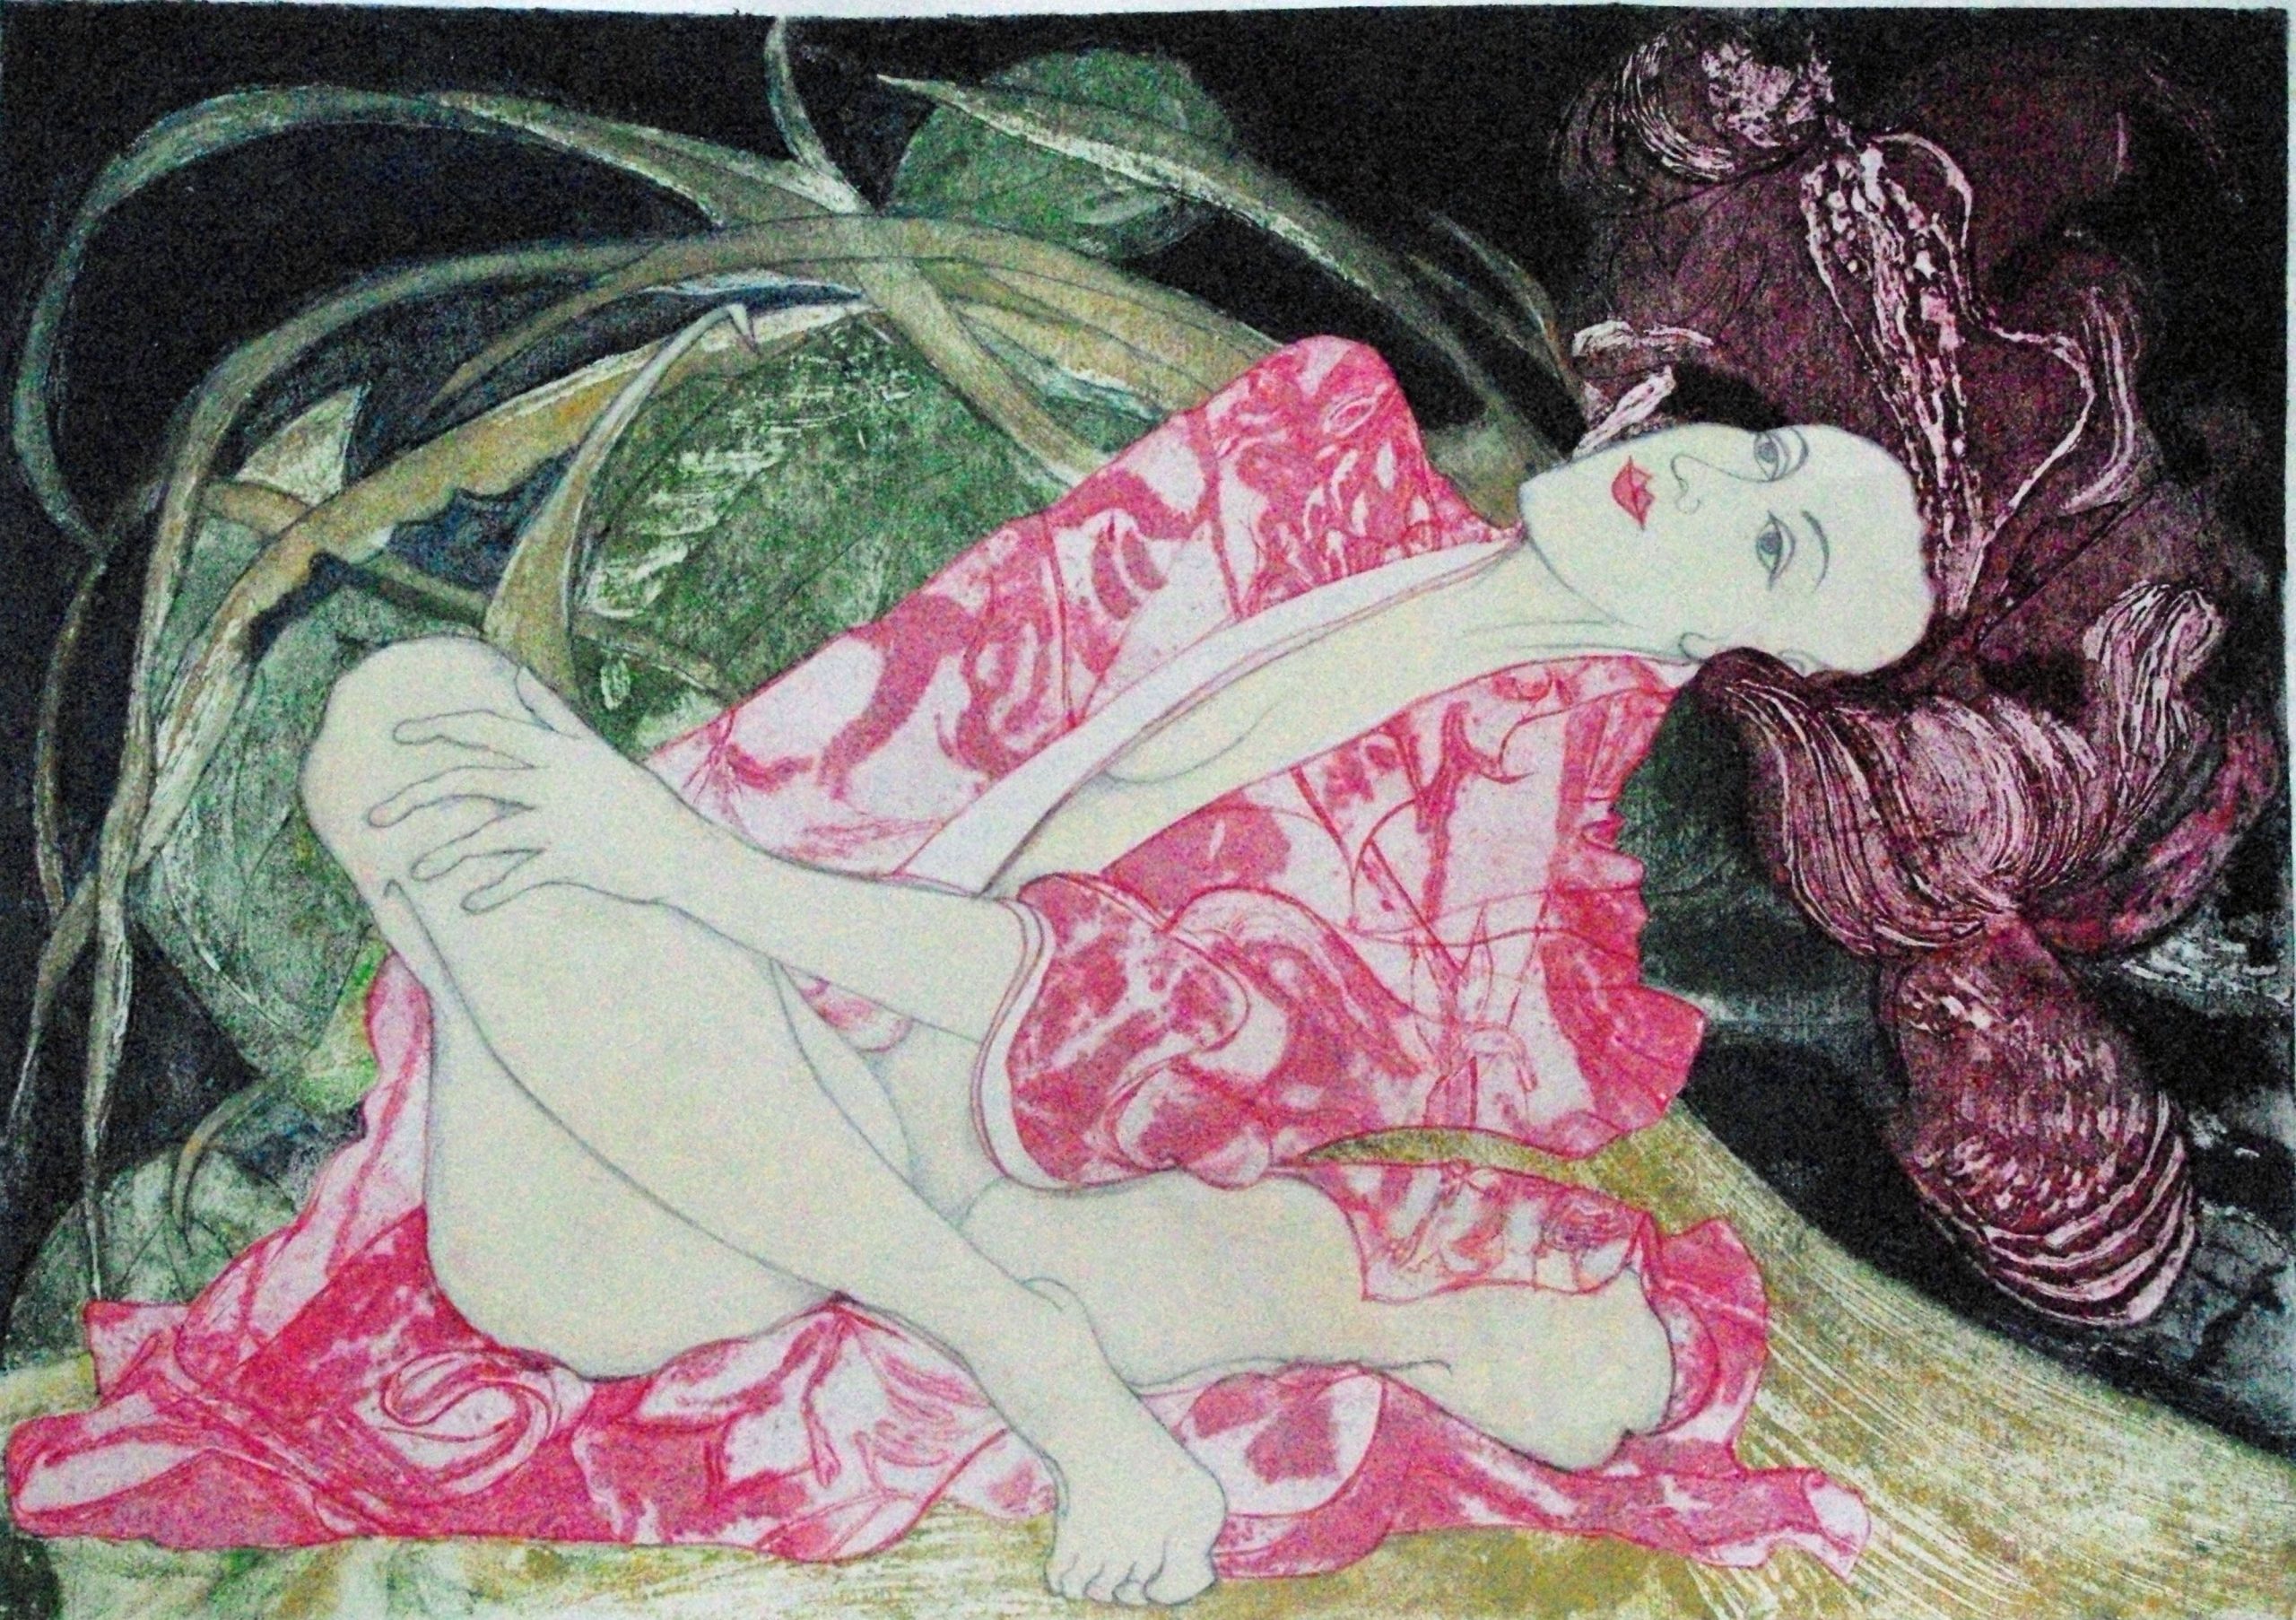 Print of a woman in a kimono